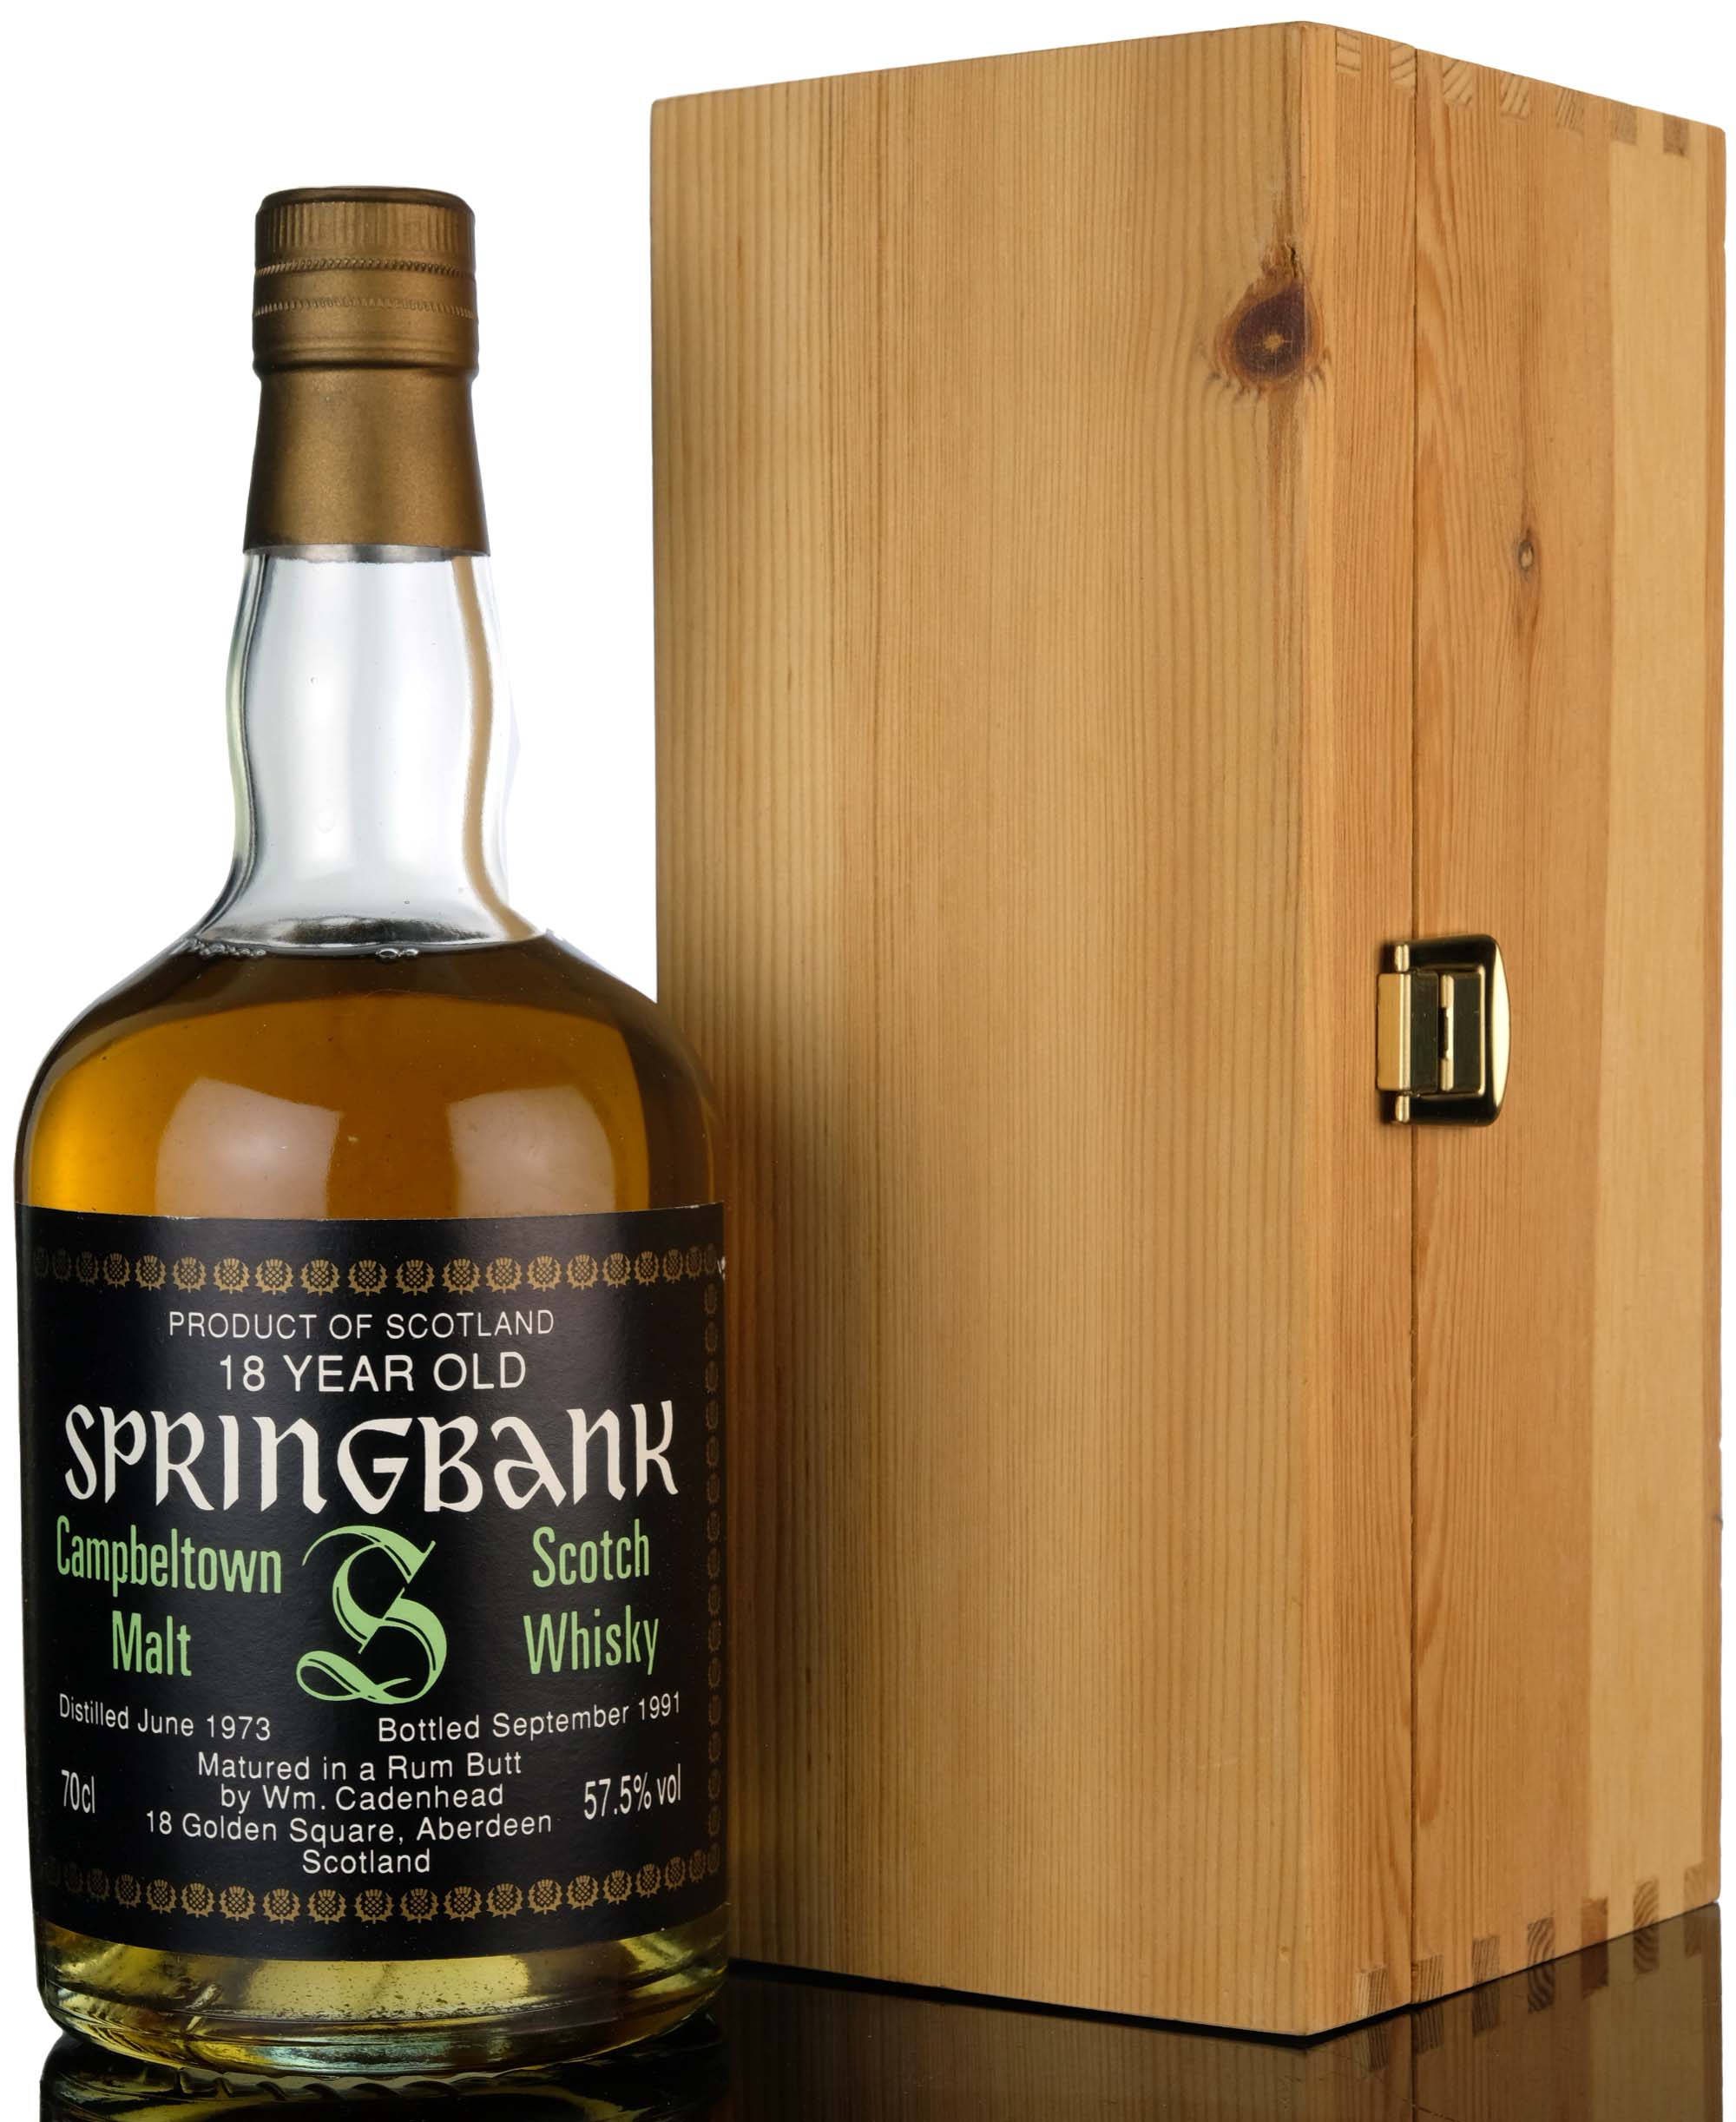 Springbank 1973-1991 - 18 Year Old - Cadenheads Rum Butt - 57.5%